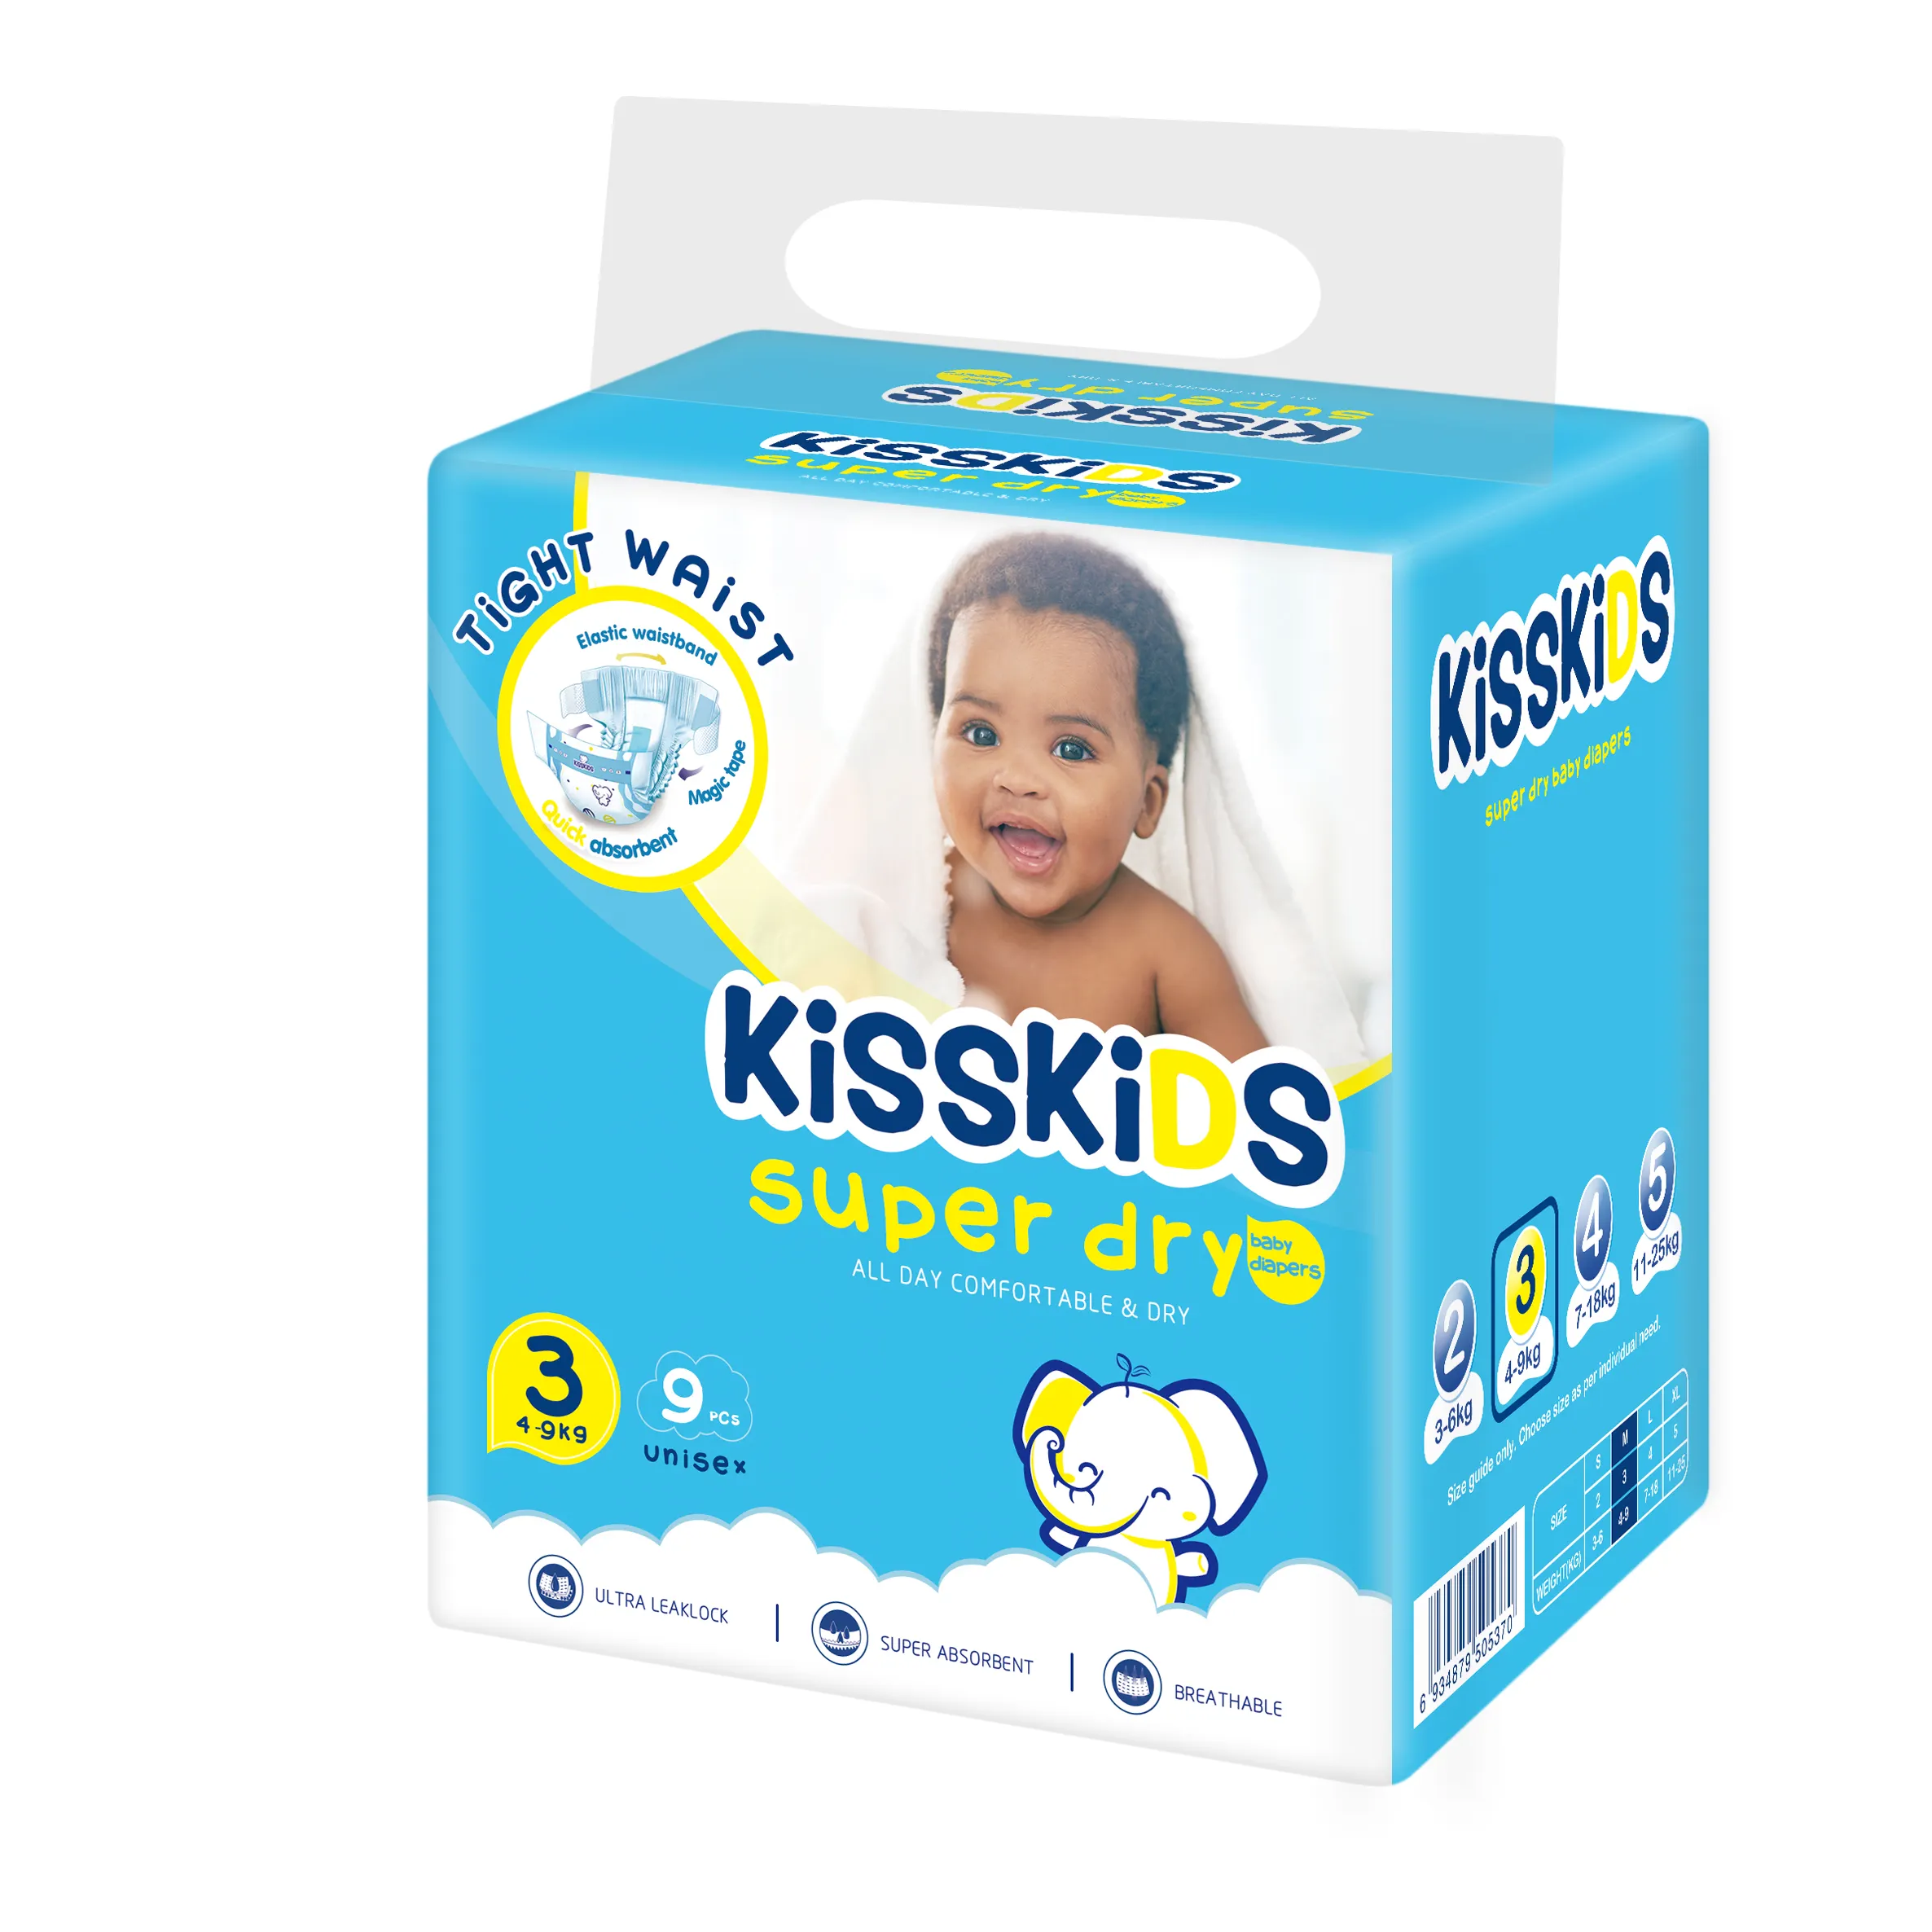 Kisskids-حفاضات للأطفال, حفاضات للأطفال الرضع تجف فائق الامتصاص وصديقة للبيئة